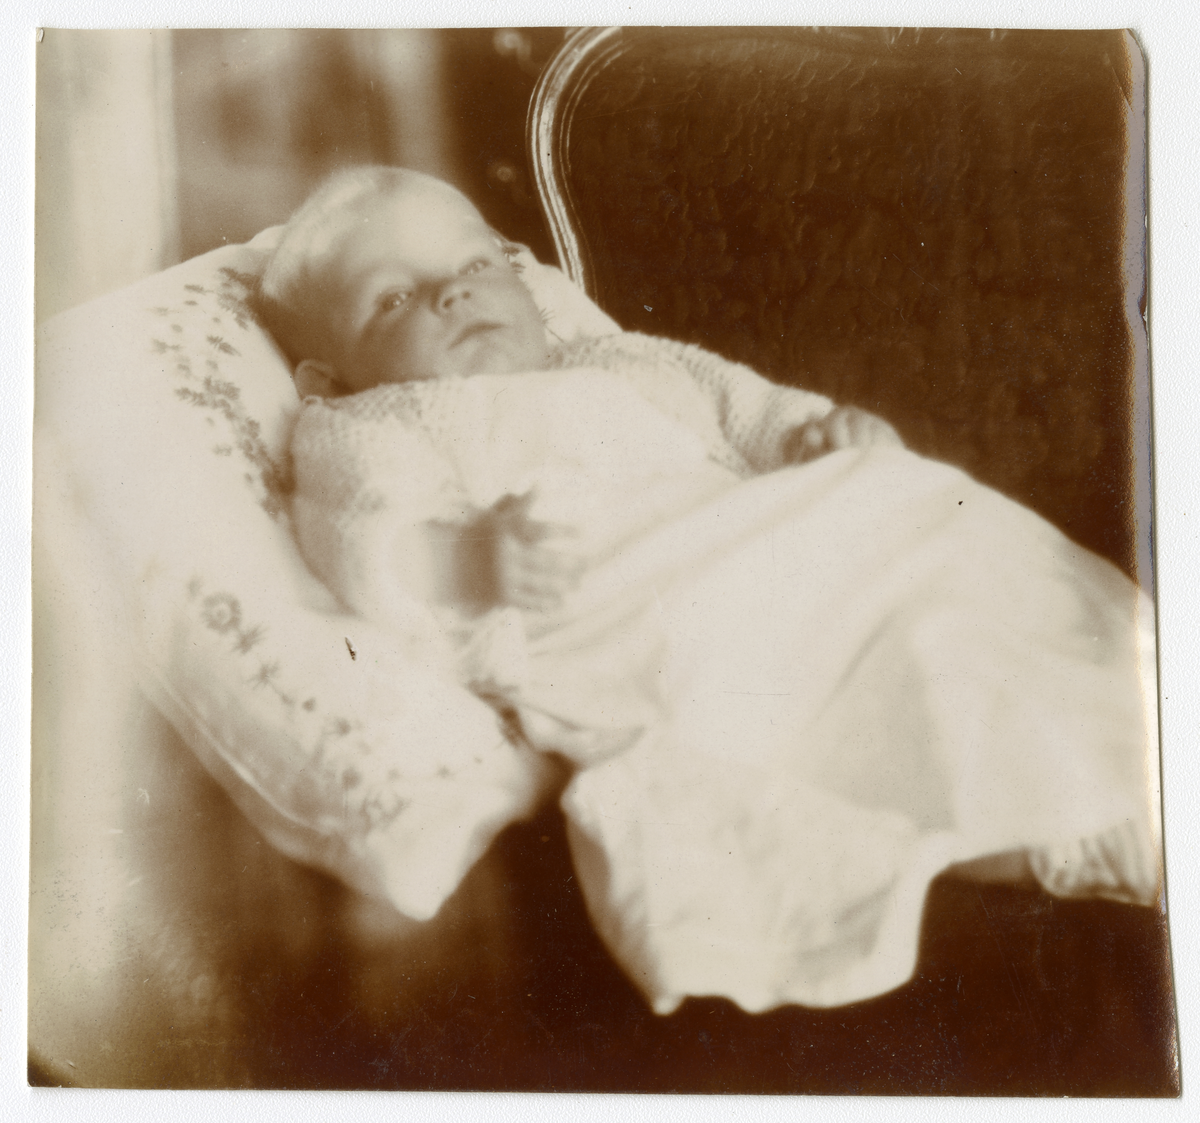 Spedbarn liggeri stol i 1912. Niels Frederik Aall som baby